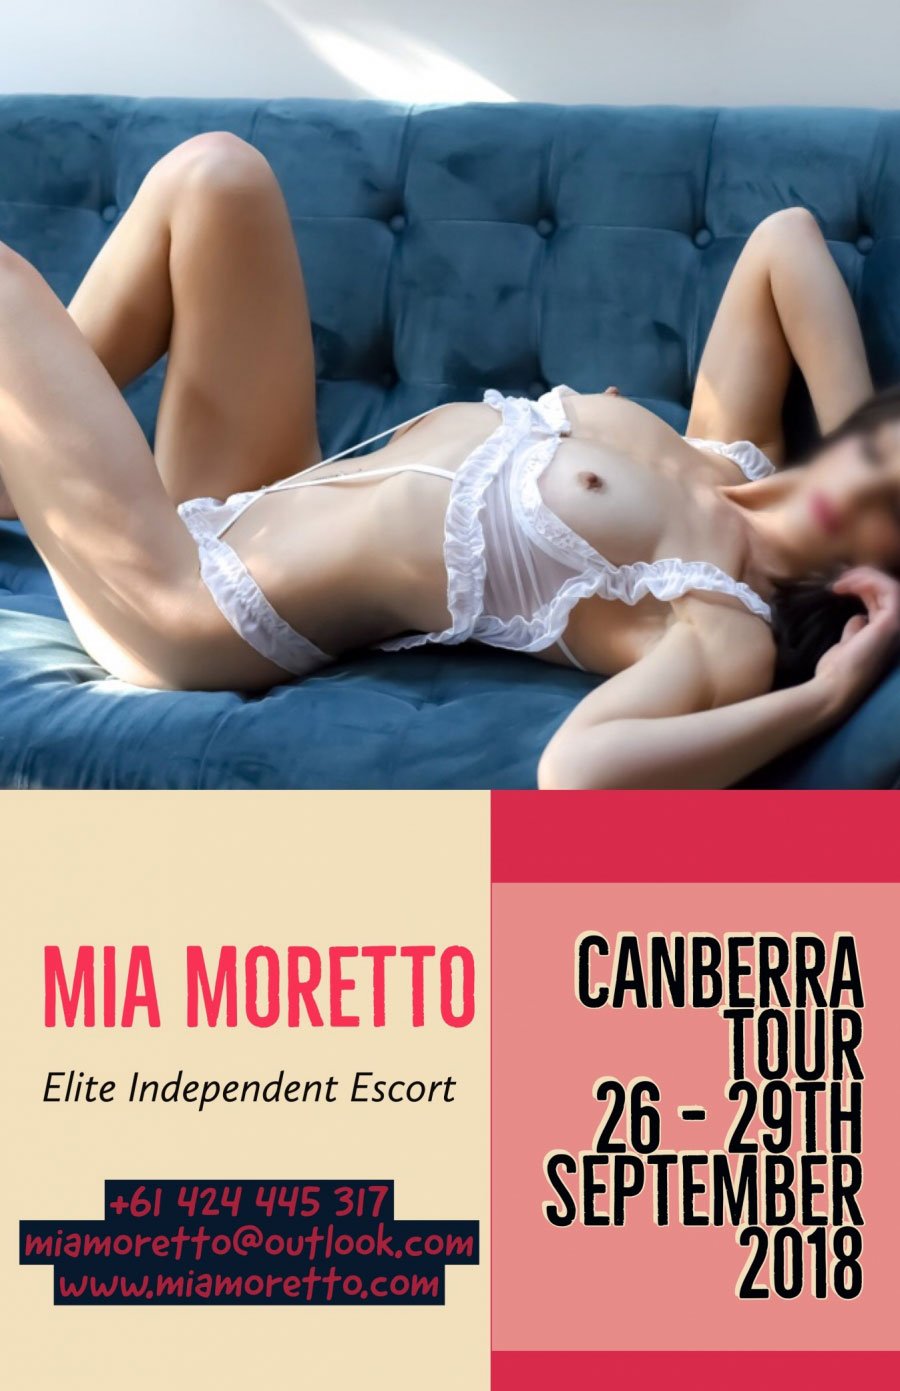 Mia Moretto, Hot Sydney Escort touring Canberra